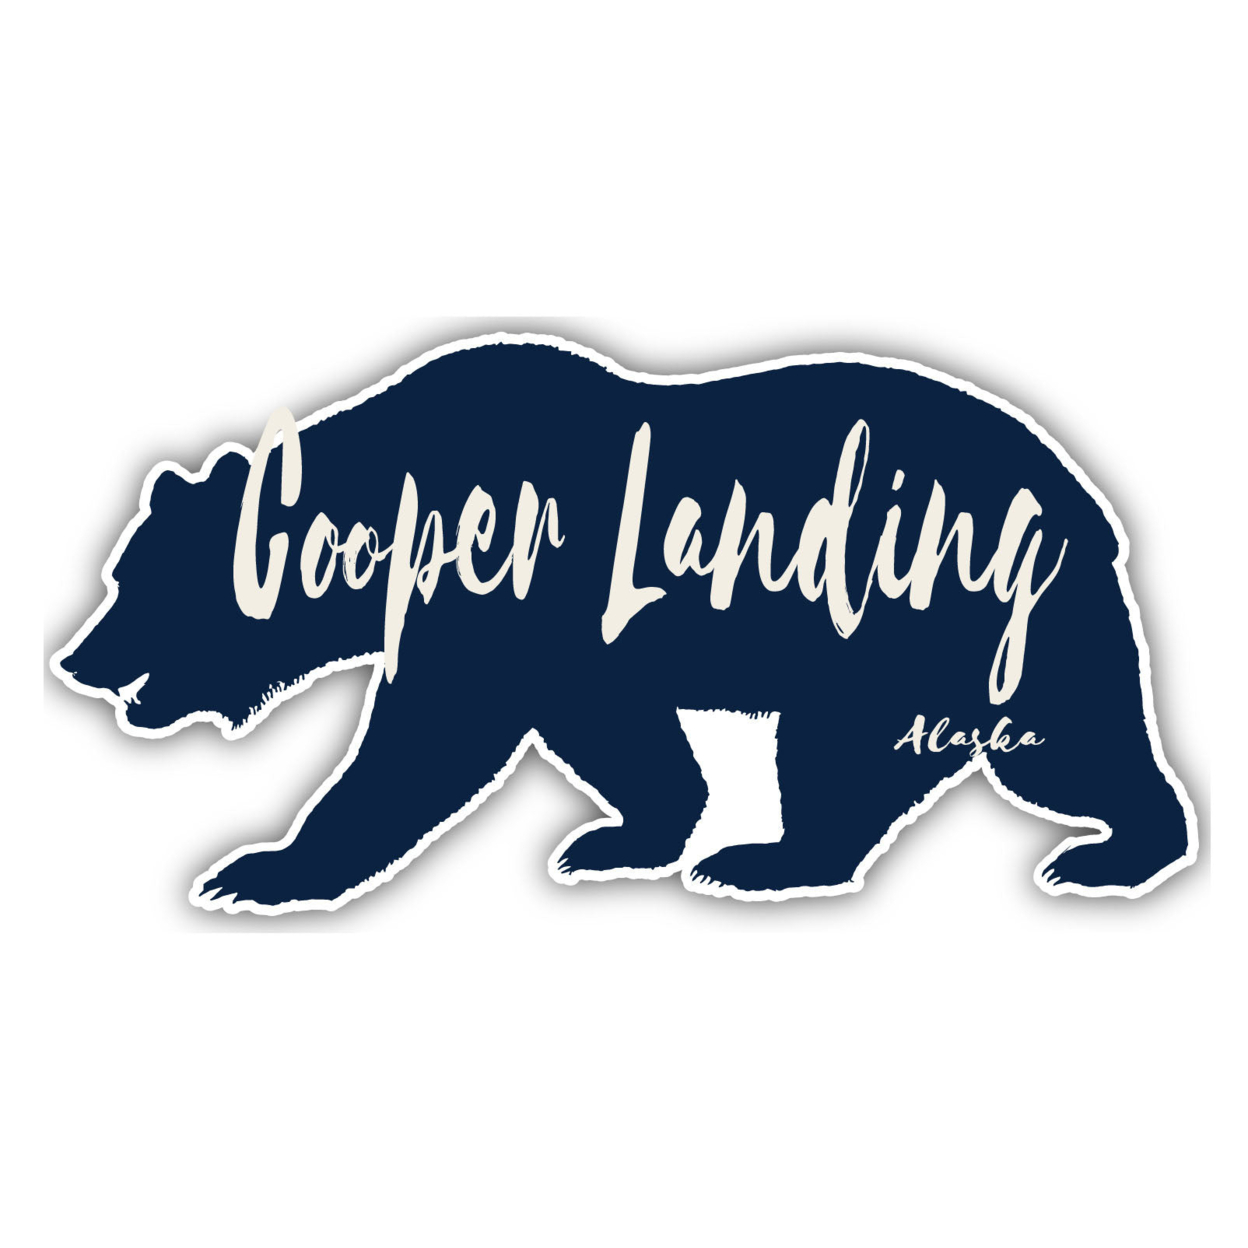 Cooper Landing Alaska Souvenir Decorative Stickers (Choose Theme And Size) - Single Unit, 8-Inch, Tent